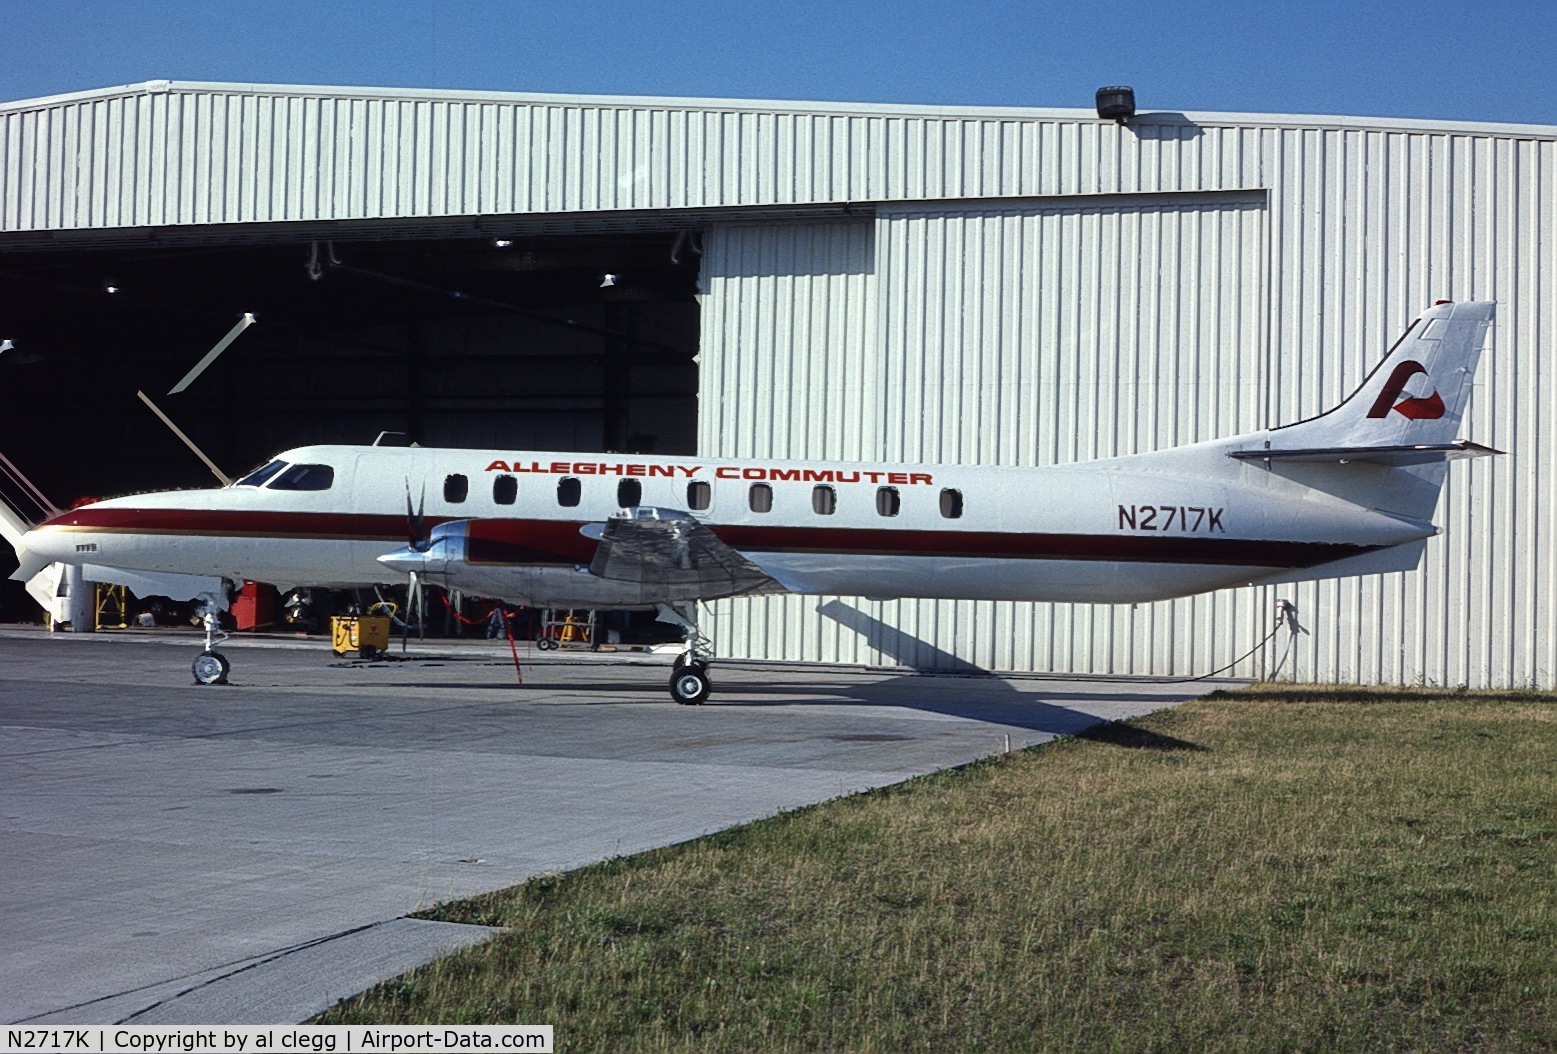 N2717K, 1988 Fairchild SA-227AC Metro III C/N AC-705, Allegheny Commuter Fairchild SA227-AC.